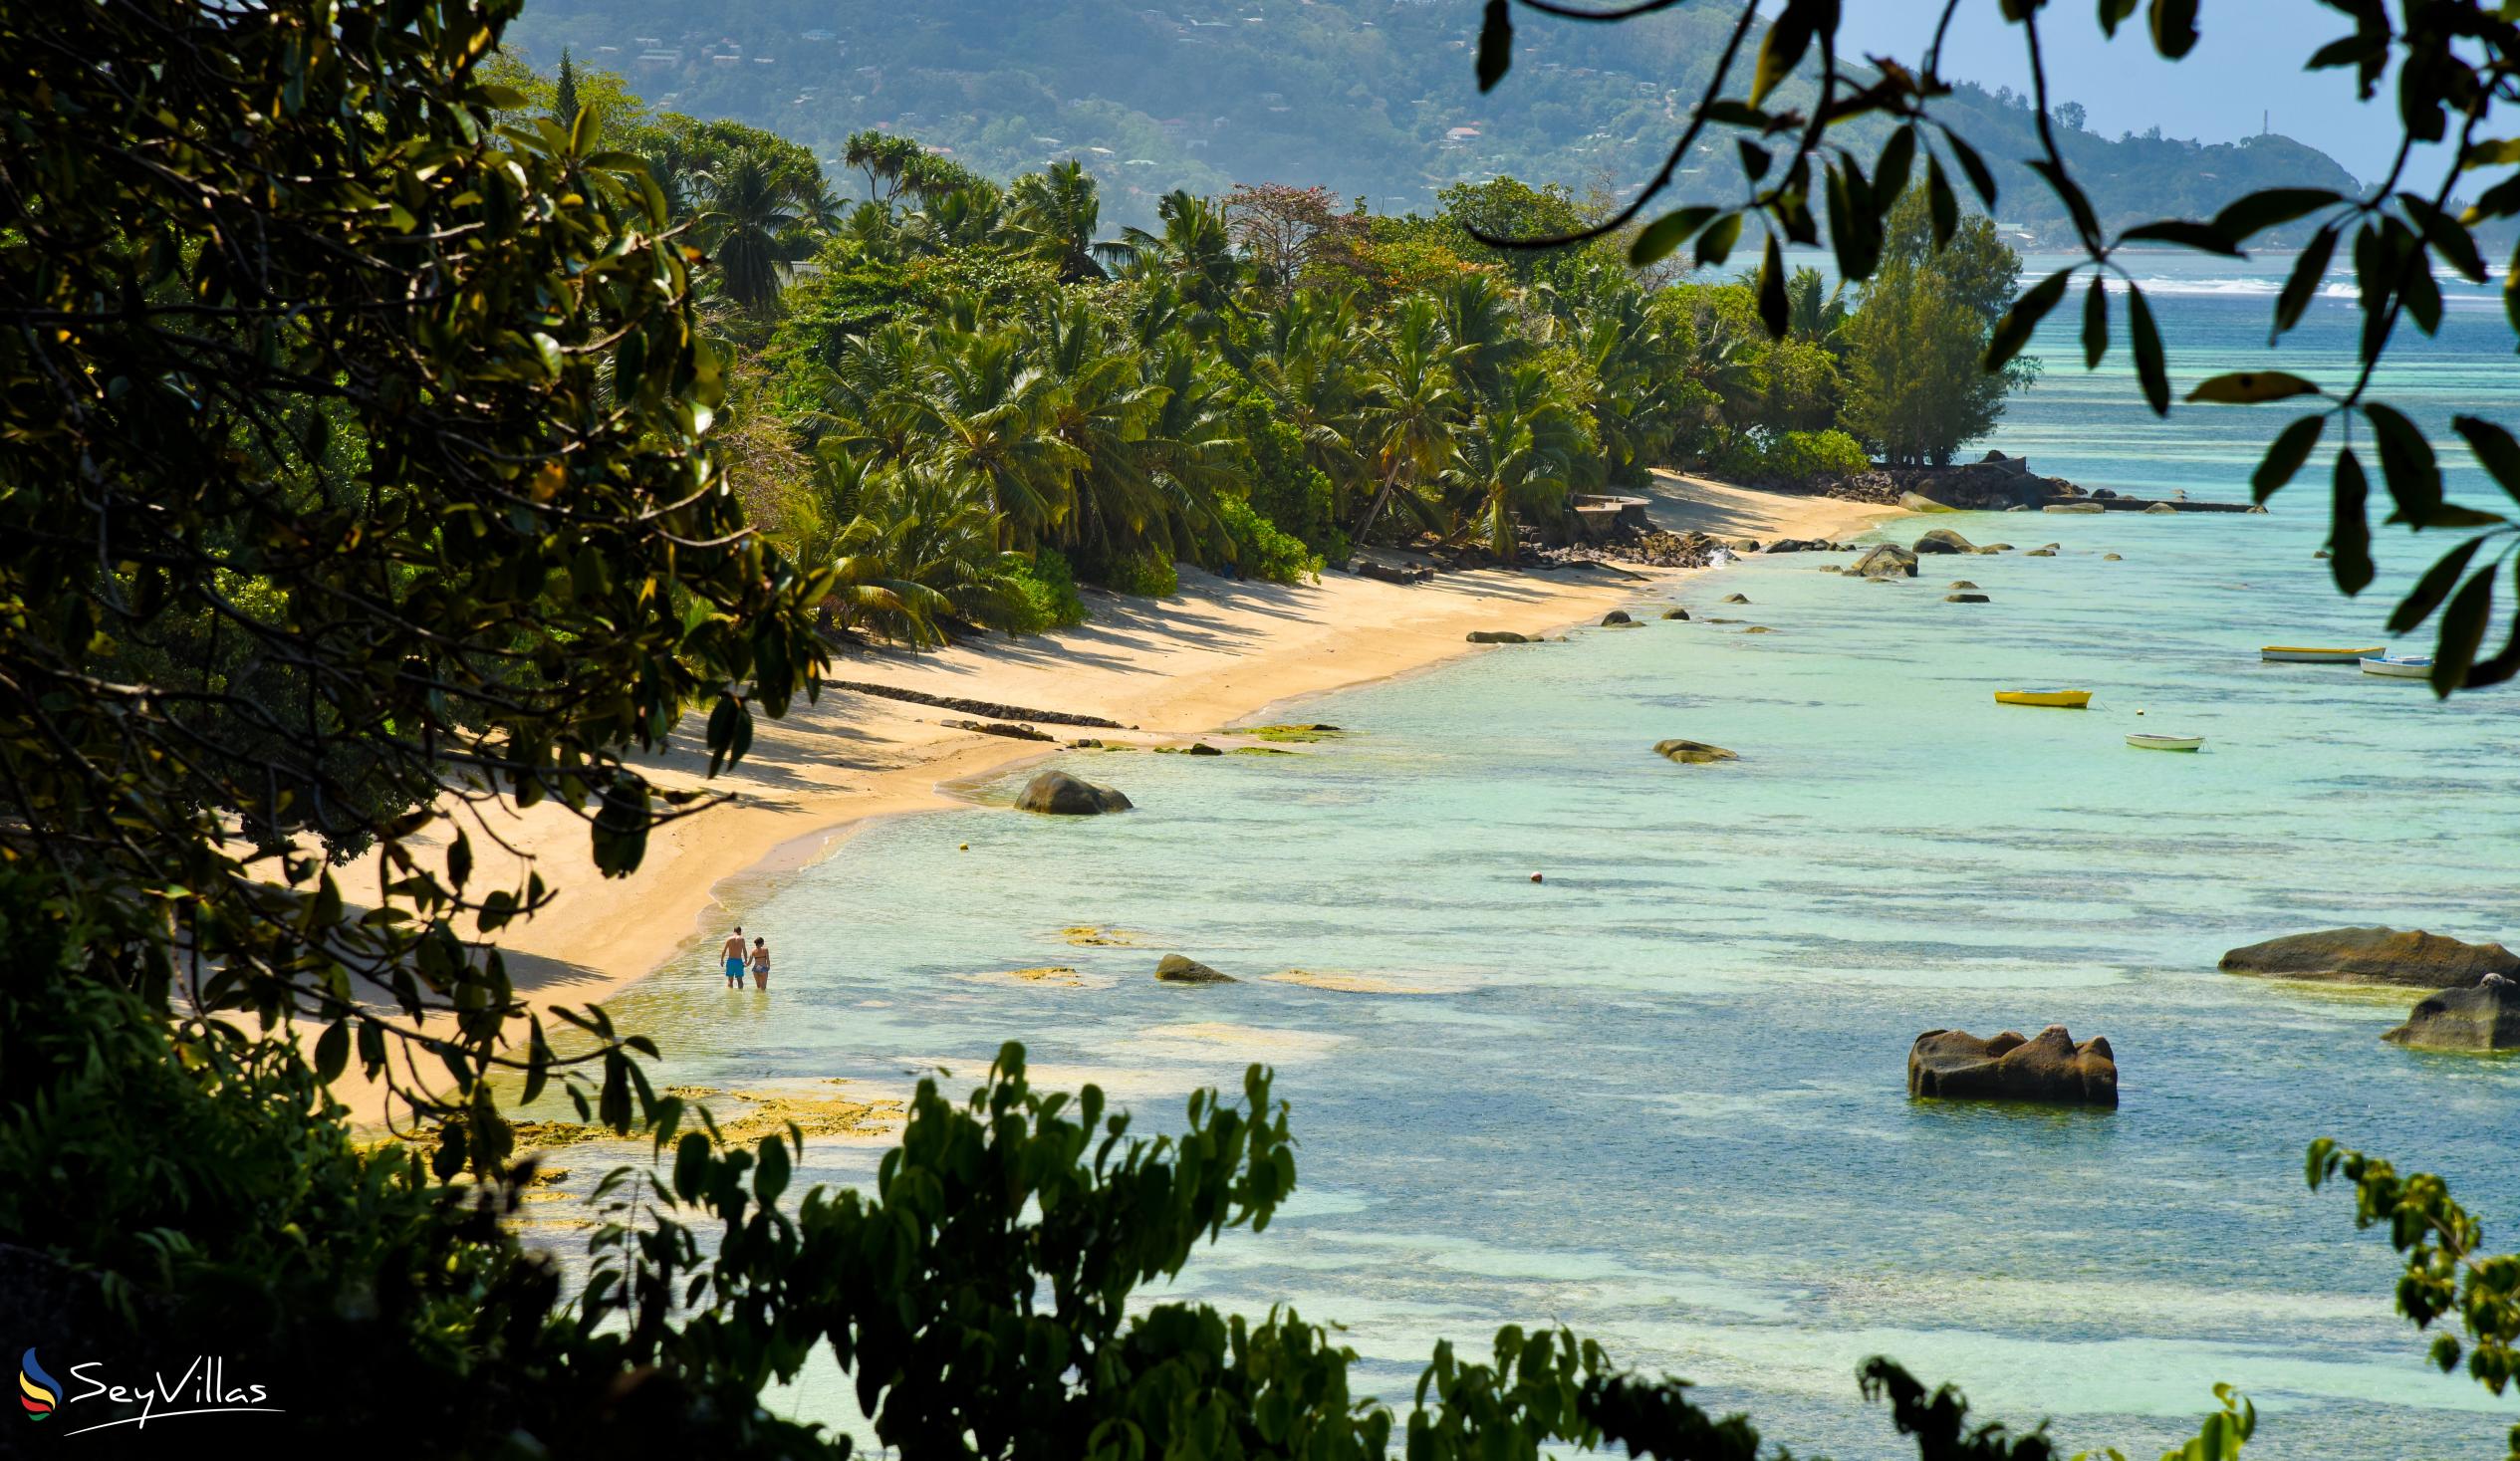 Photo 7: Pointe au Sel - Mahé (Seychelles)